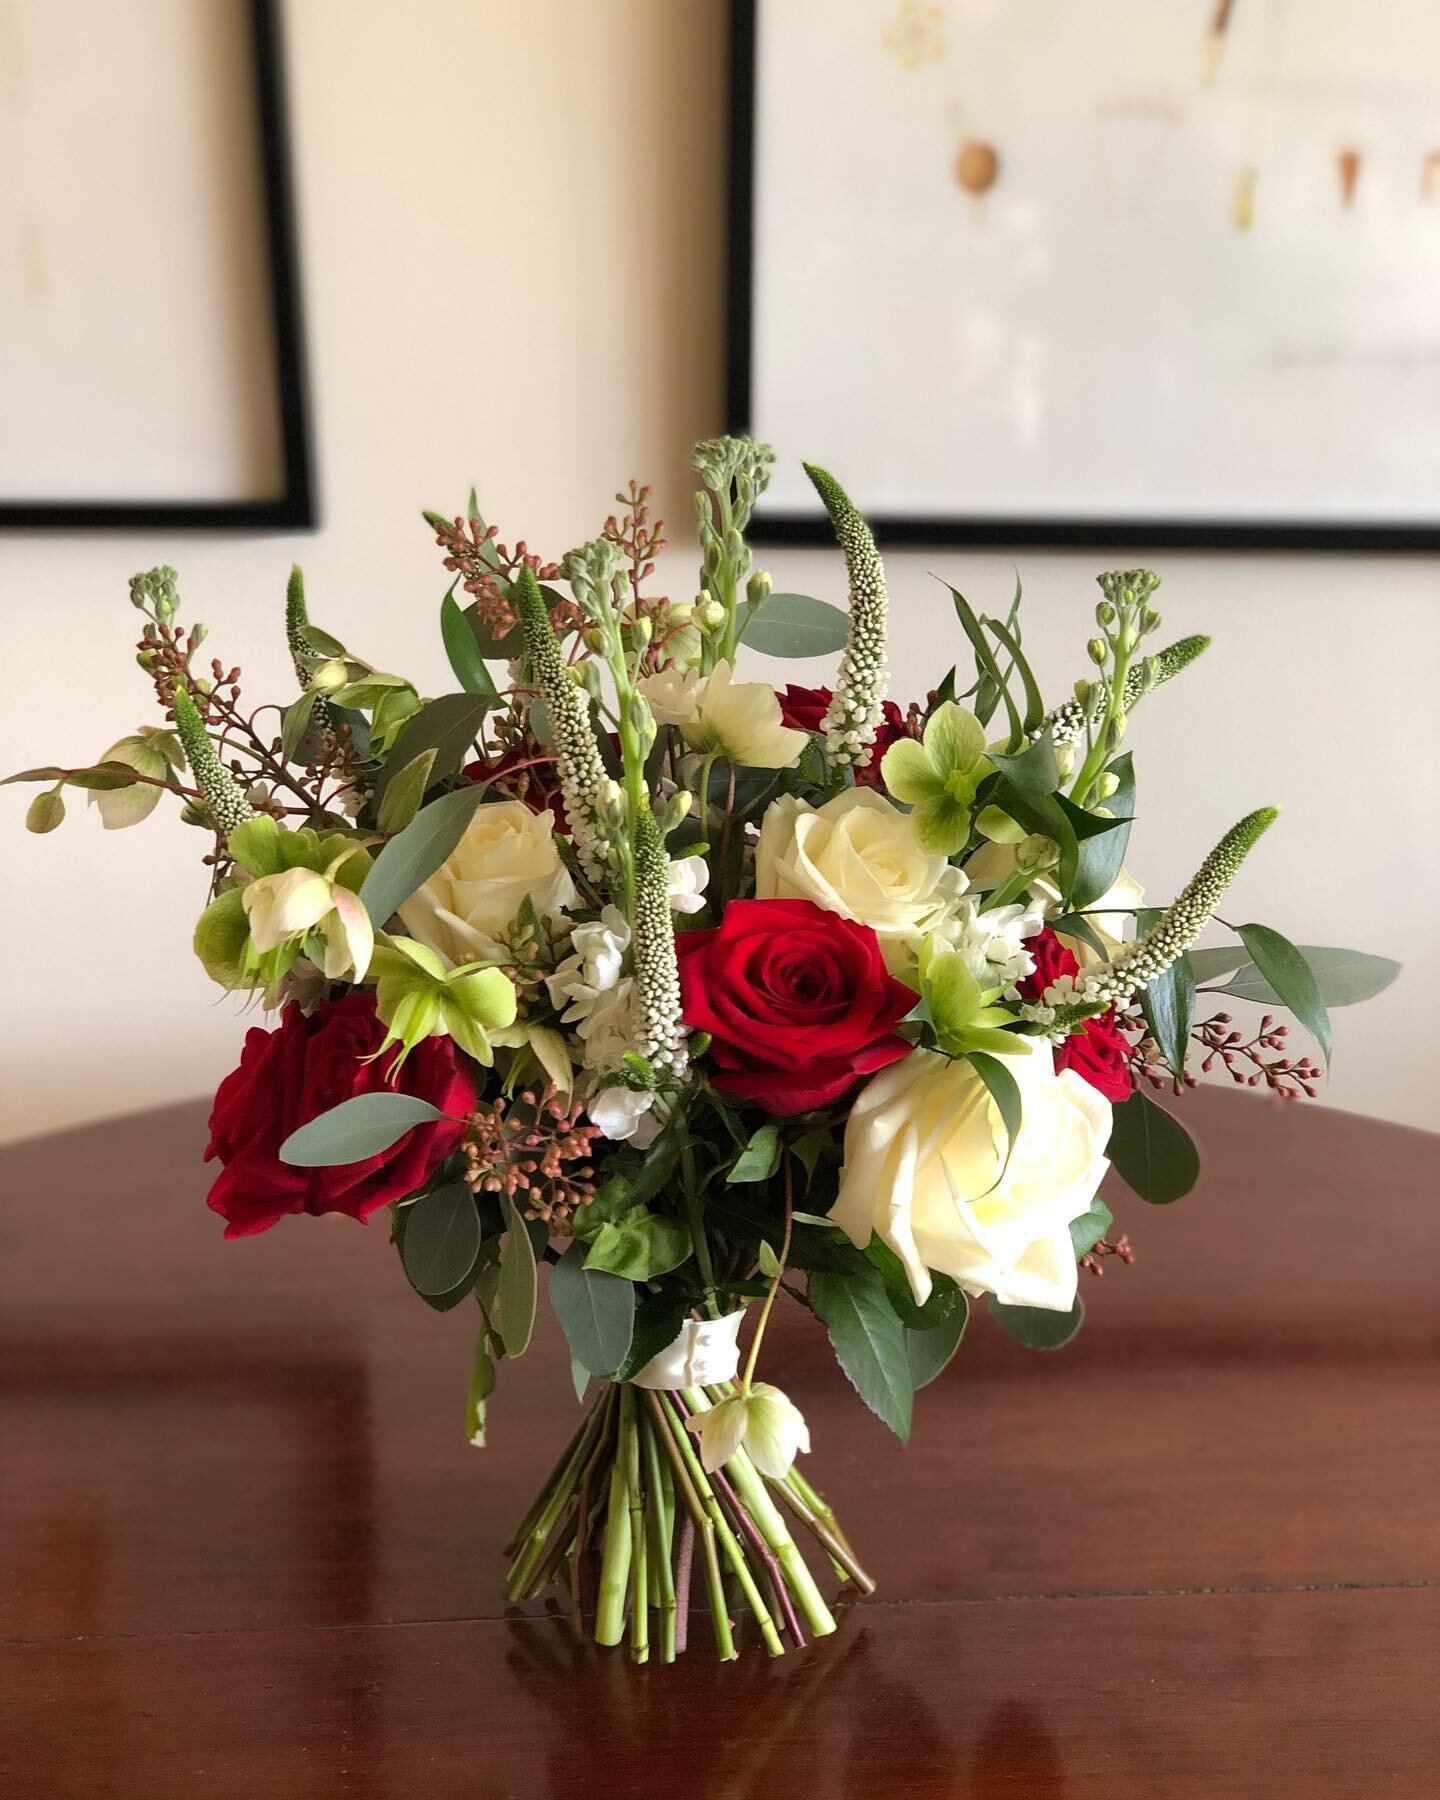 Red &amp; white Roses featuring gorgeous green Hellebores for Cassie on the weekend @charlecotetph - congratulations both🥂 .
.
.
#jh_floraldesign #stratforduponavon #wreaths #florist #flowers #flowersinstagram #floraldesign #weddingflowers #instaflo